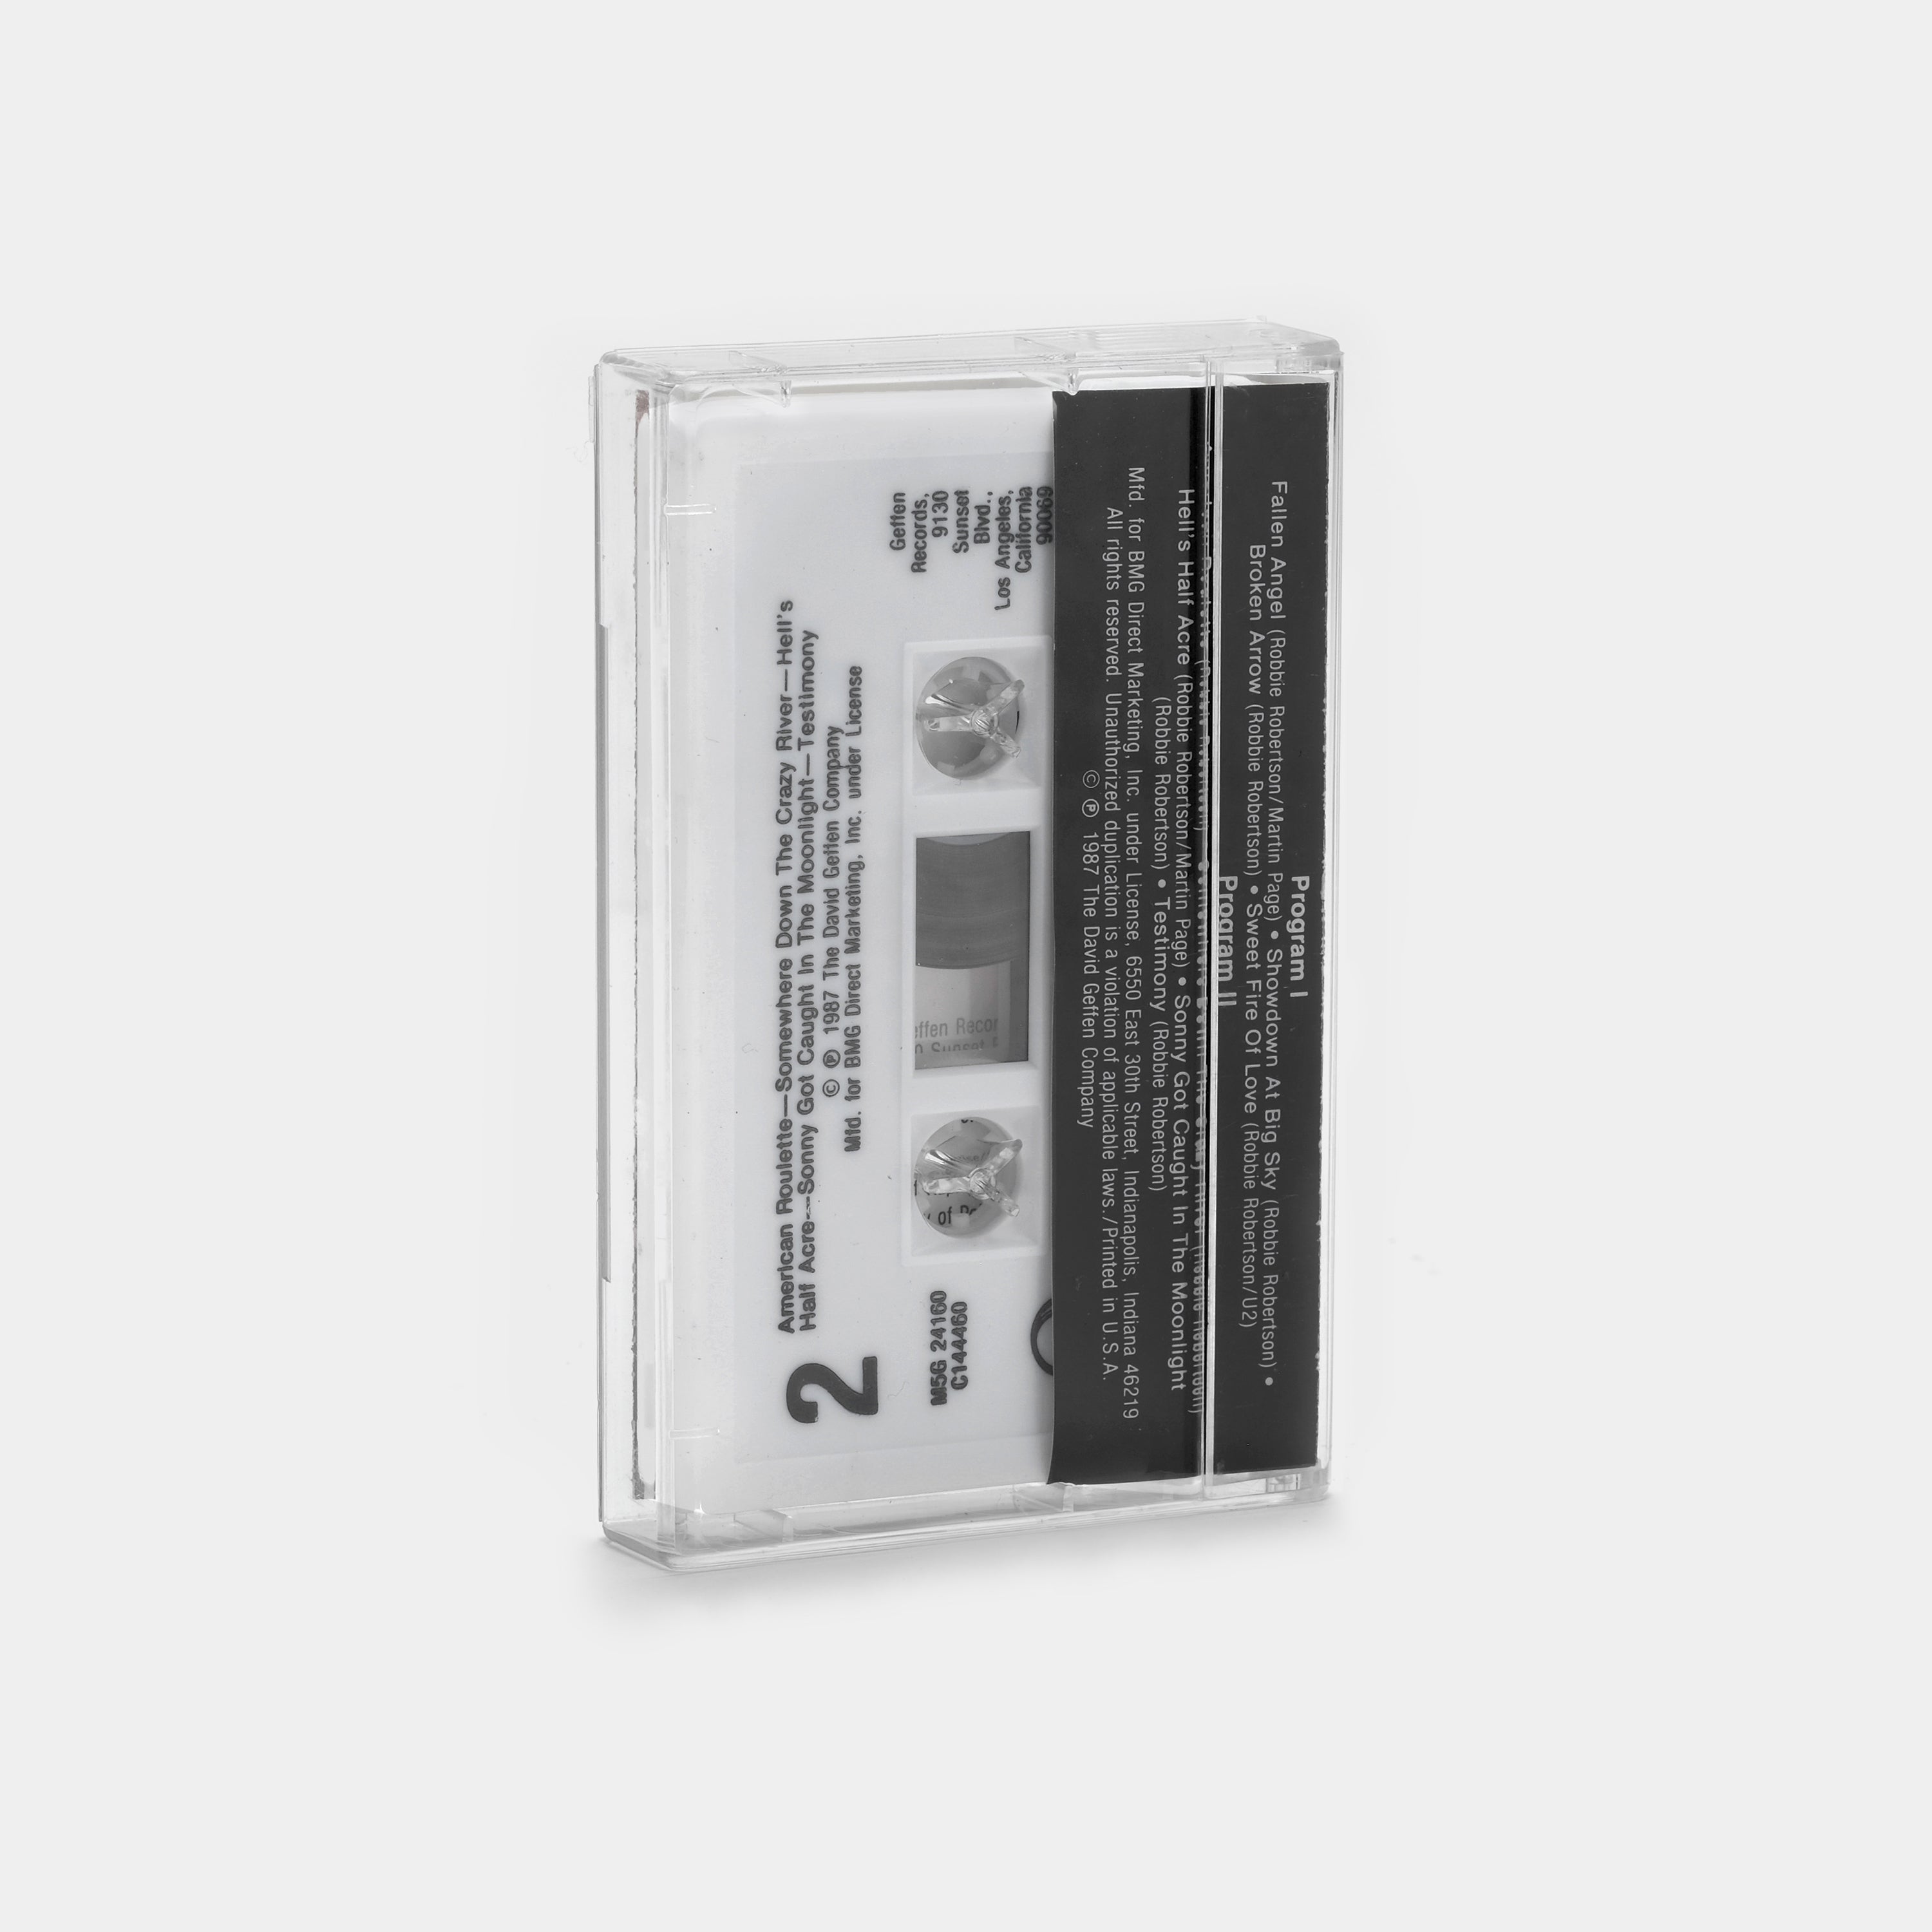 Robbie Robertson - Robbie Robertson Cassette Tape